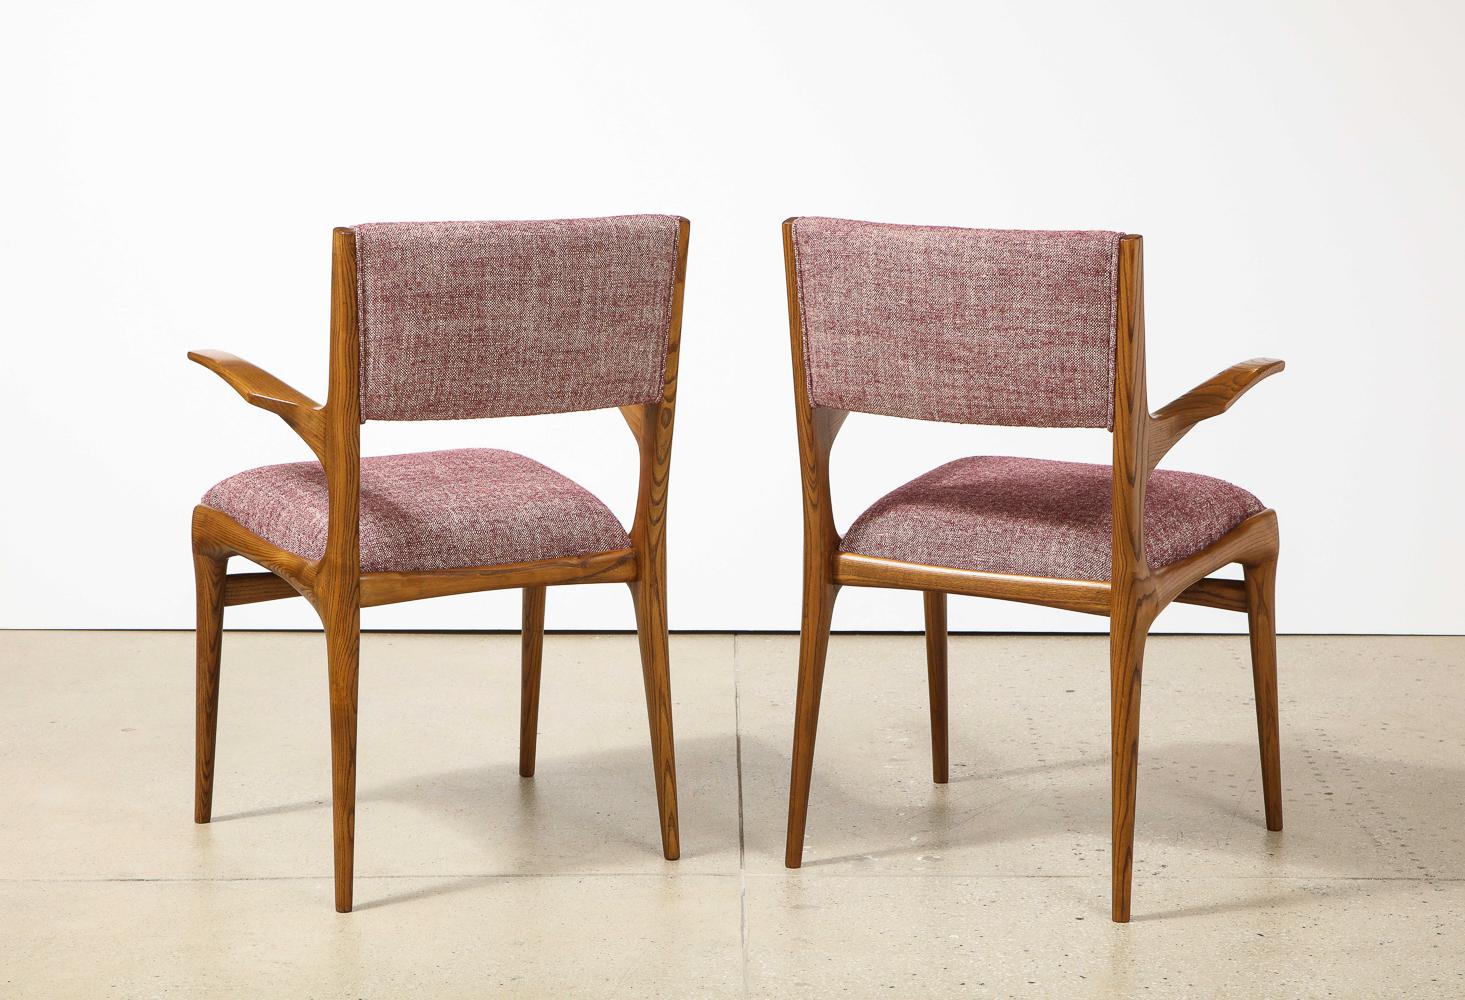 Hand-Crafted Carlo de Carli Chairs